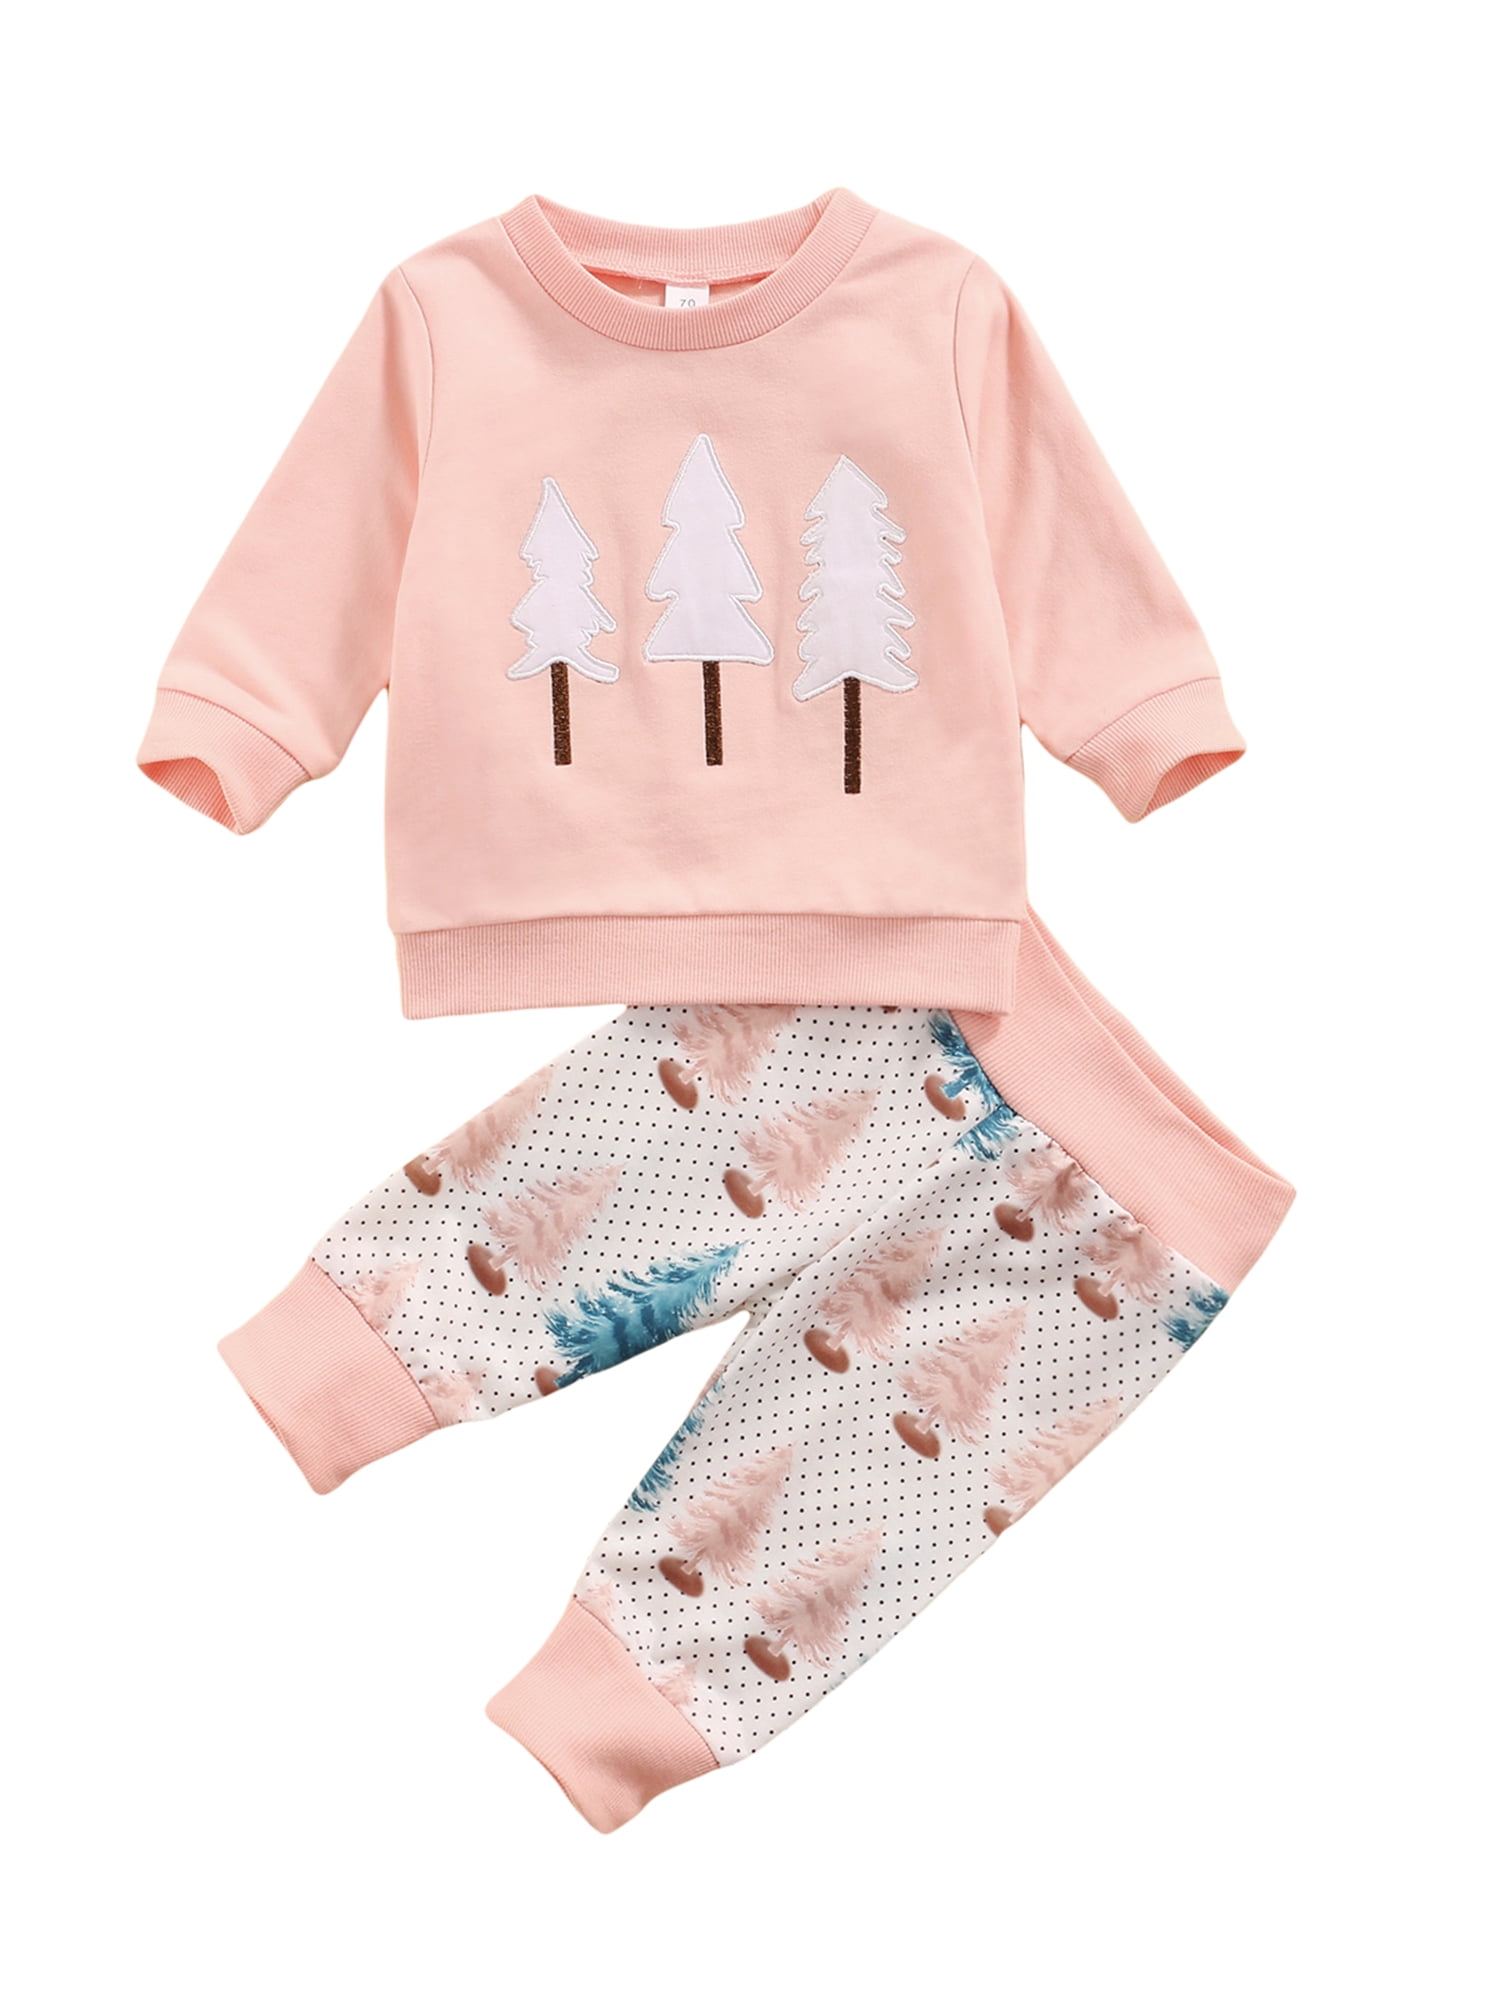 Baby Toddler Kids Unisex Longsleeve Pullover Tree Pattern Printed Cotton Sweatshirt Top,White 18-24M 